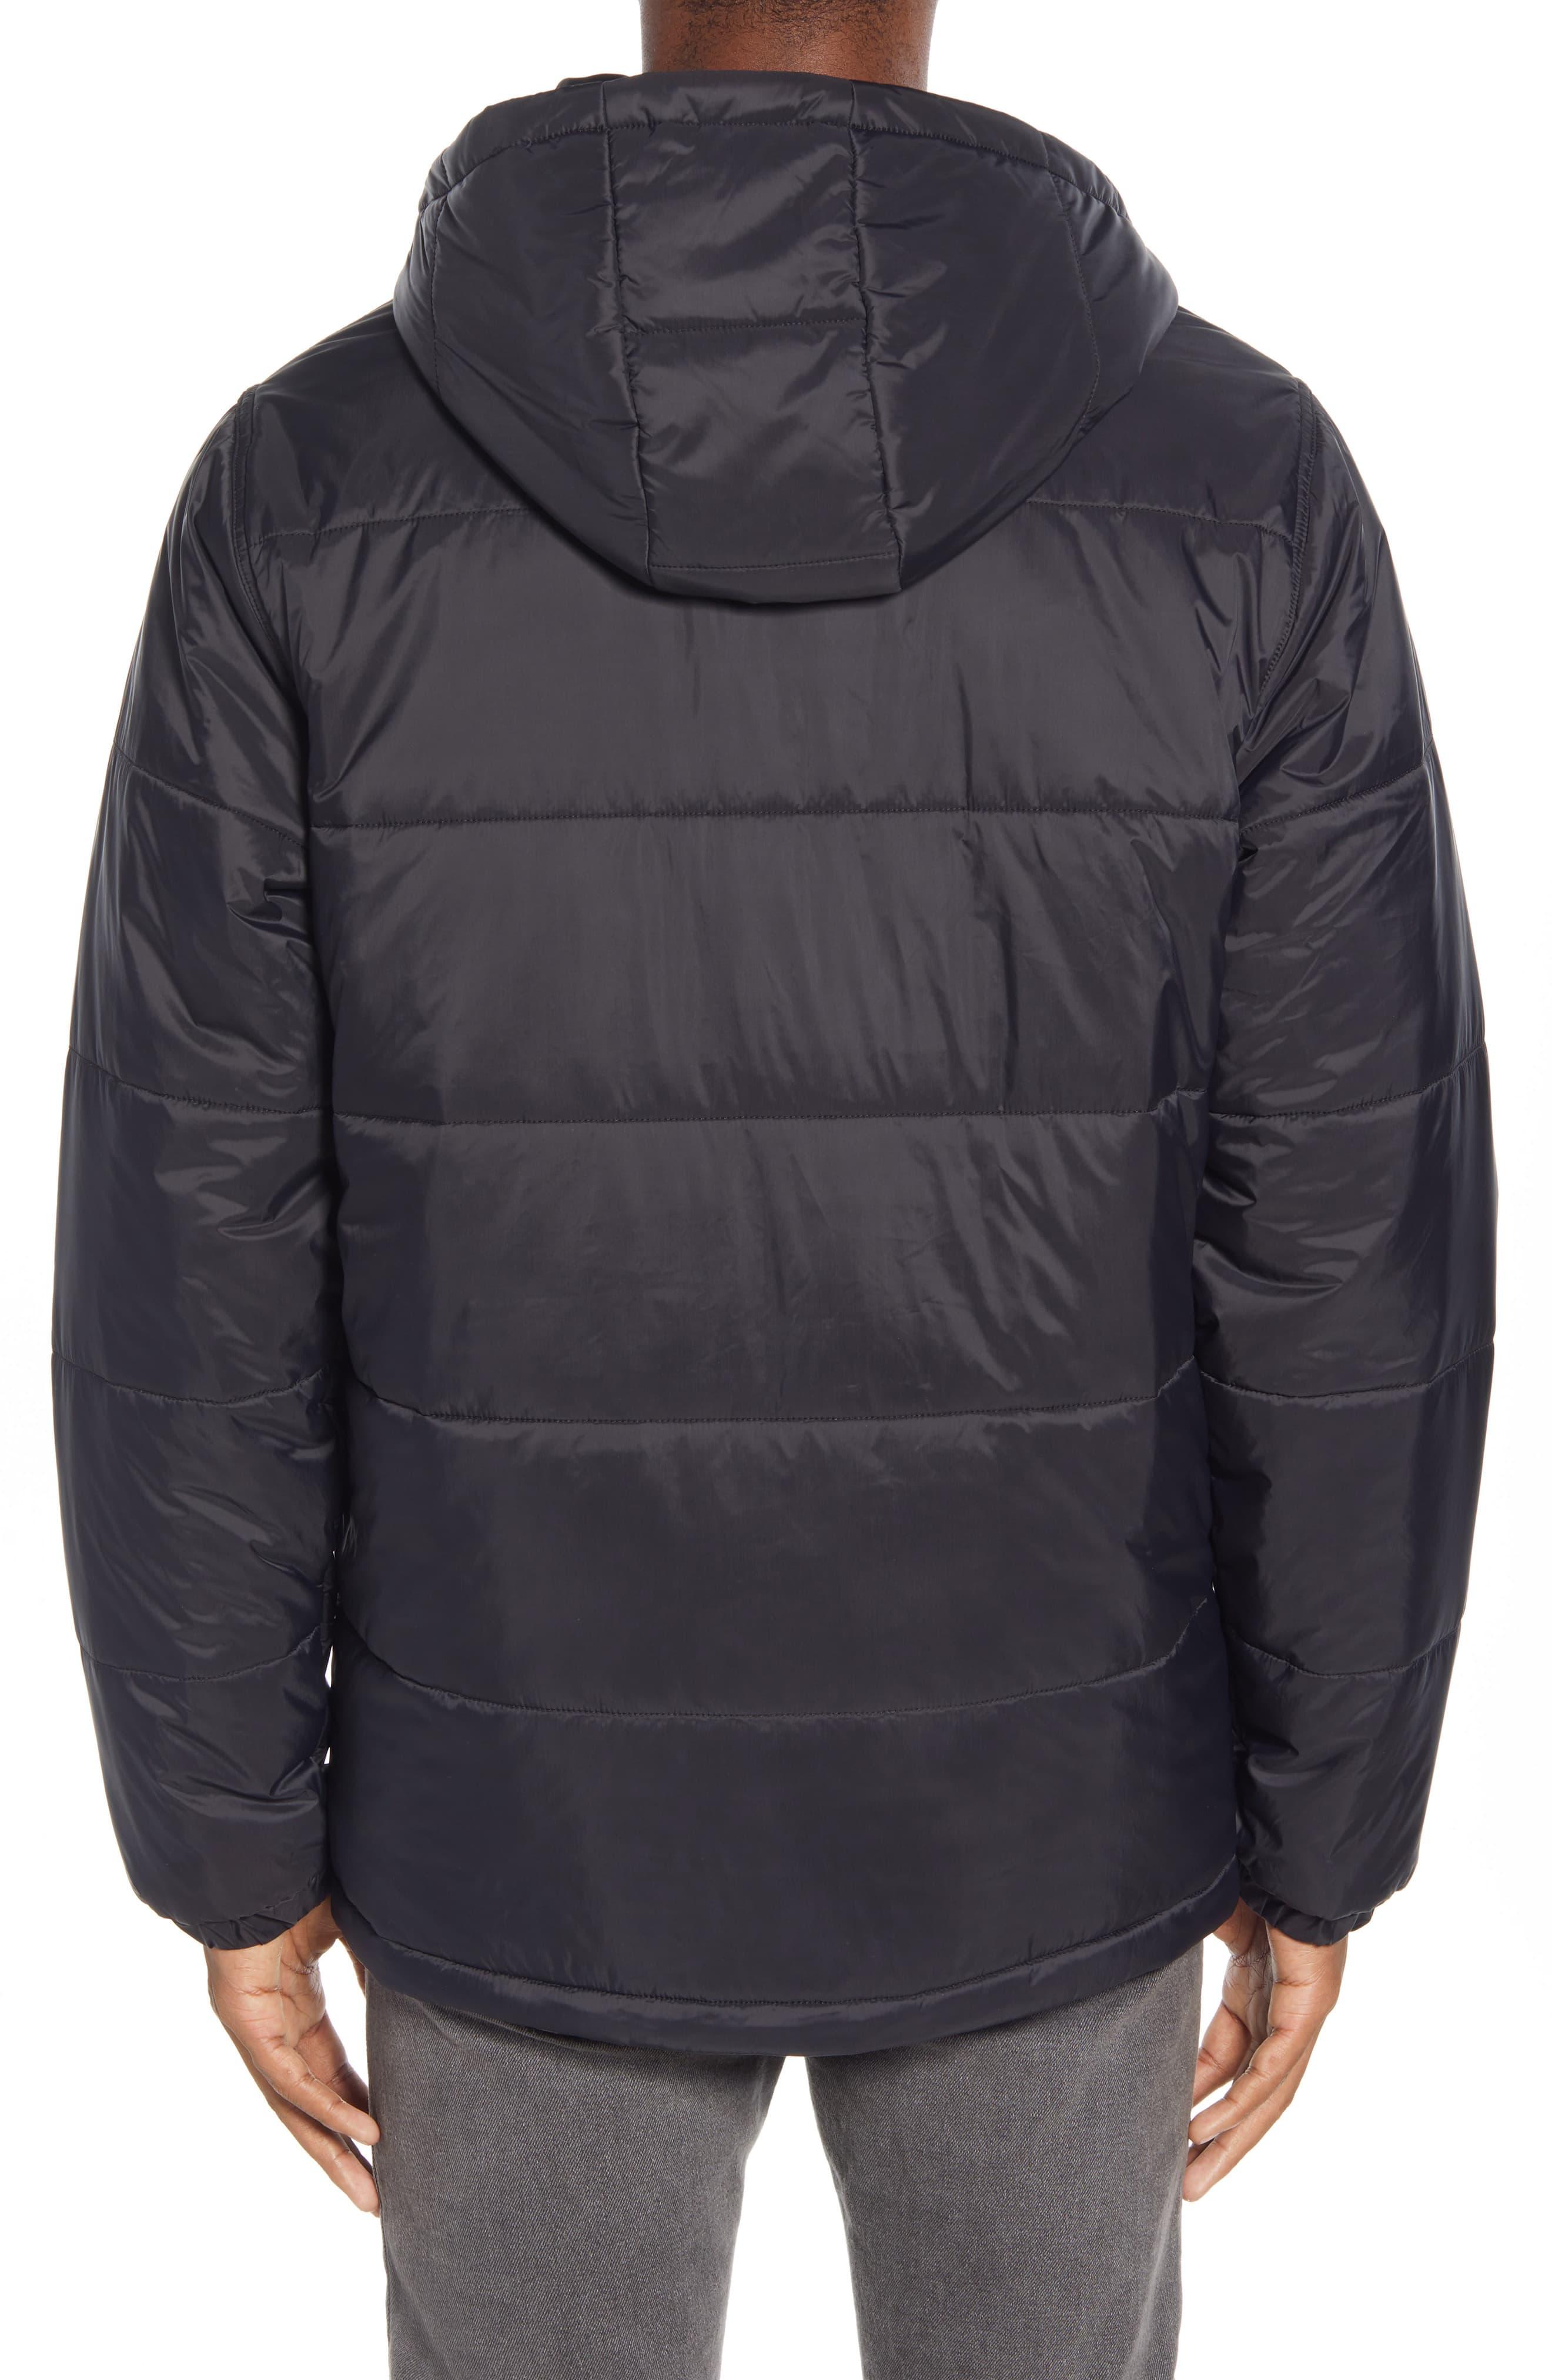 Vans Synthetic Woodridge Water Resistant Hooded Nylon Puffer Jacket in Black for Men - Lyst